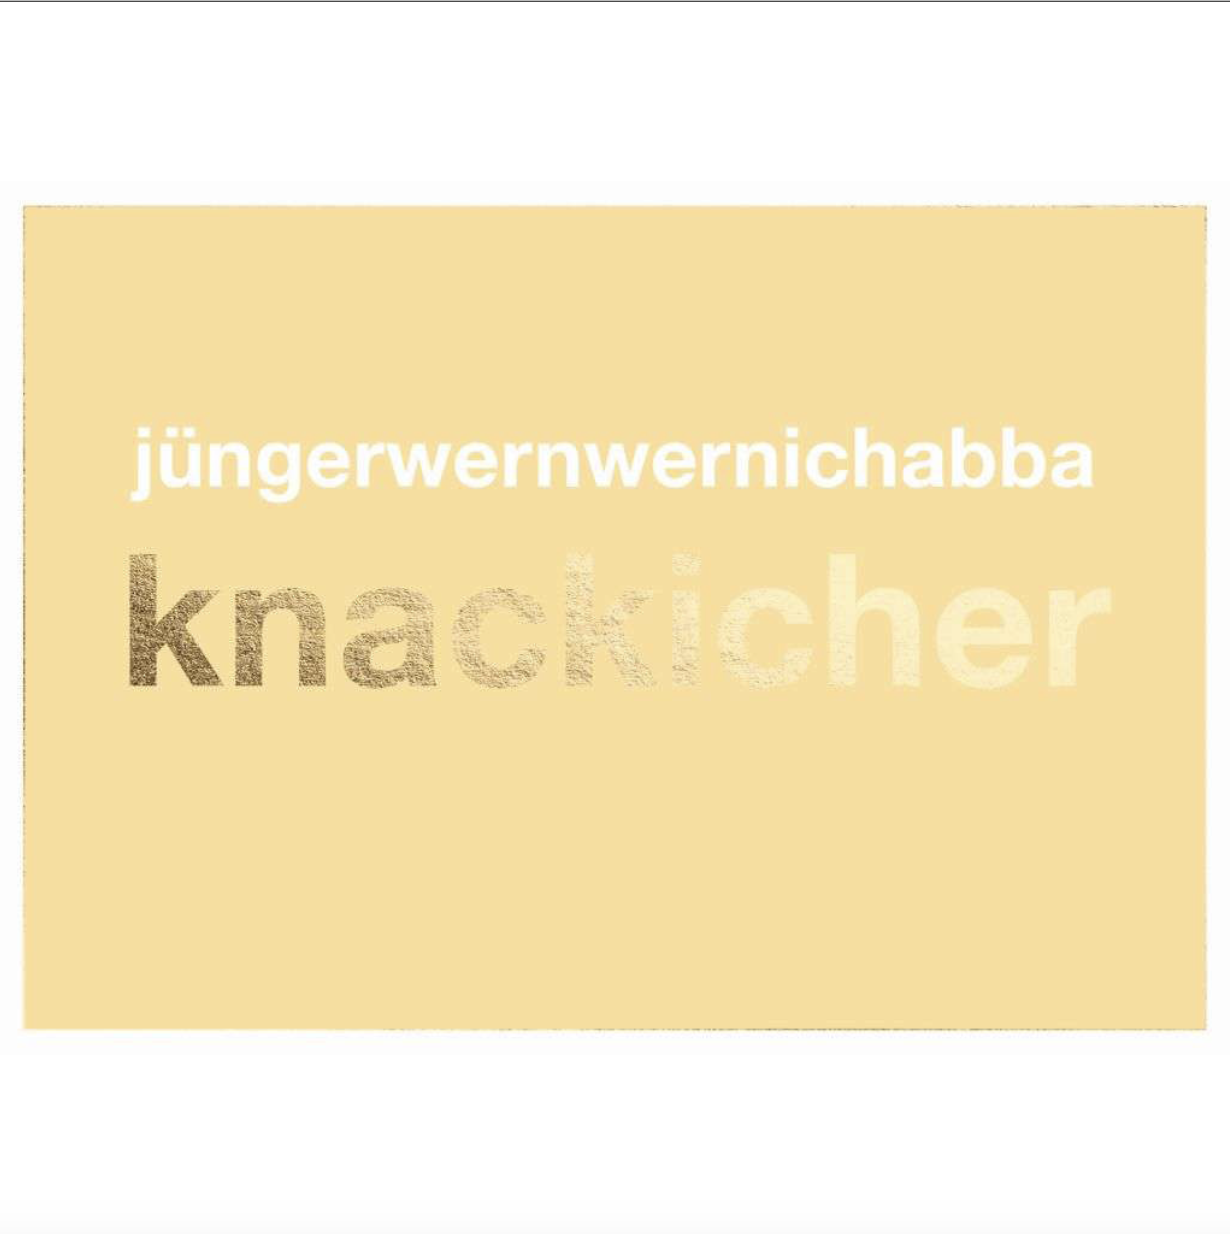 knackicher